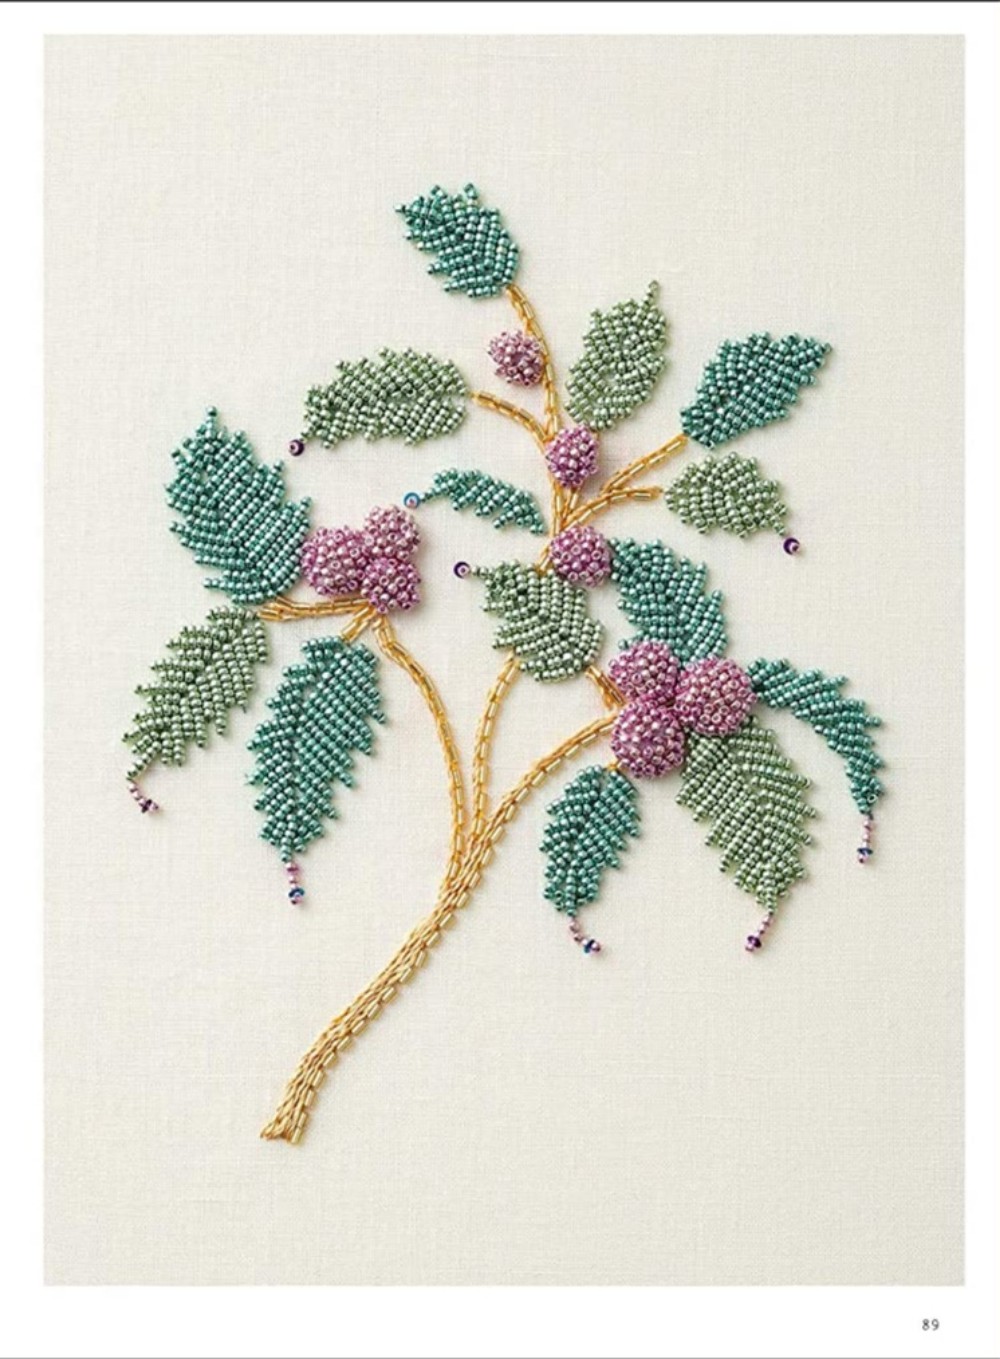 Ayako Totsuka Stitchwork 24 Embroidery Story